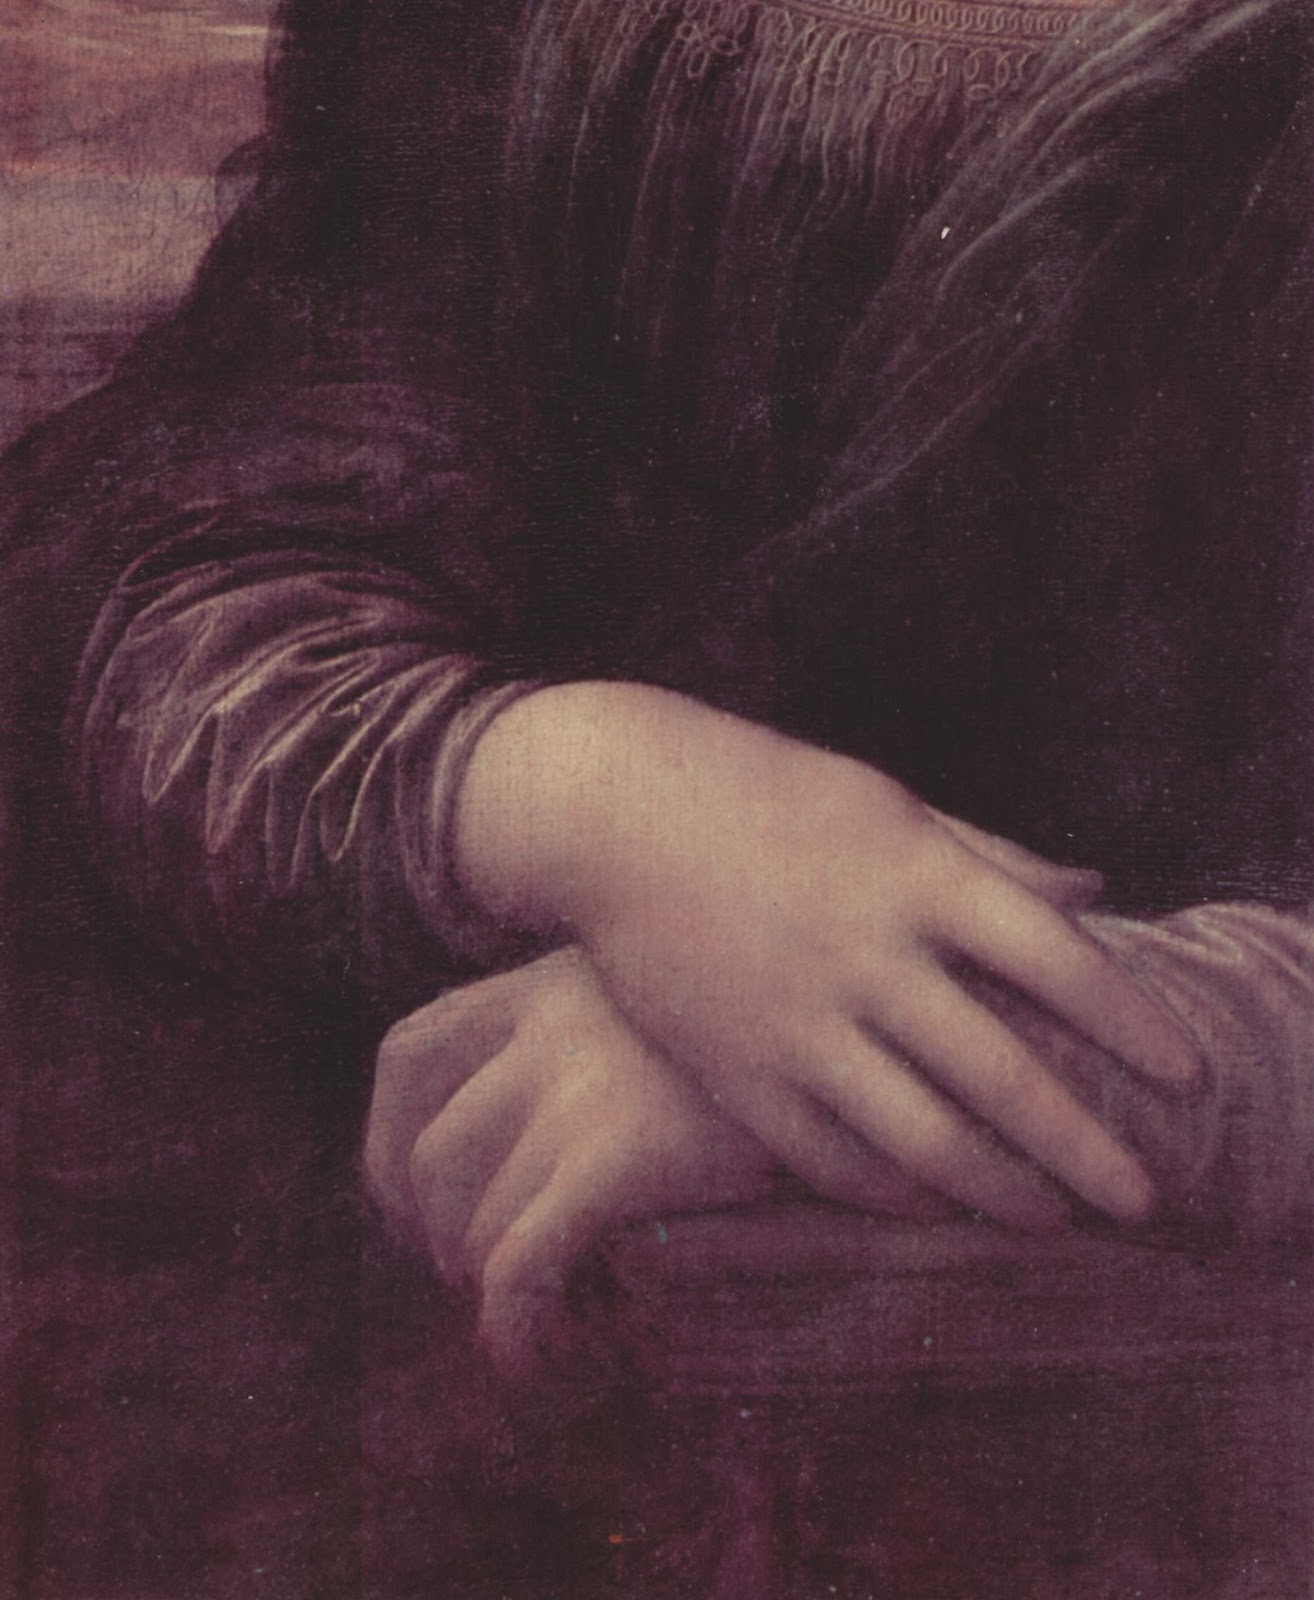 Leonardo+da+Vinci-1452-1519 (929).jpg